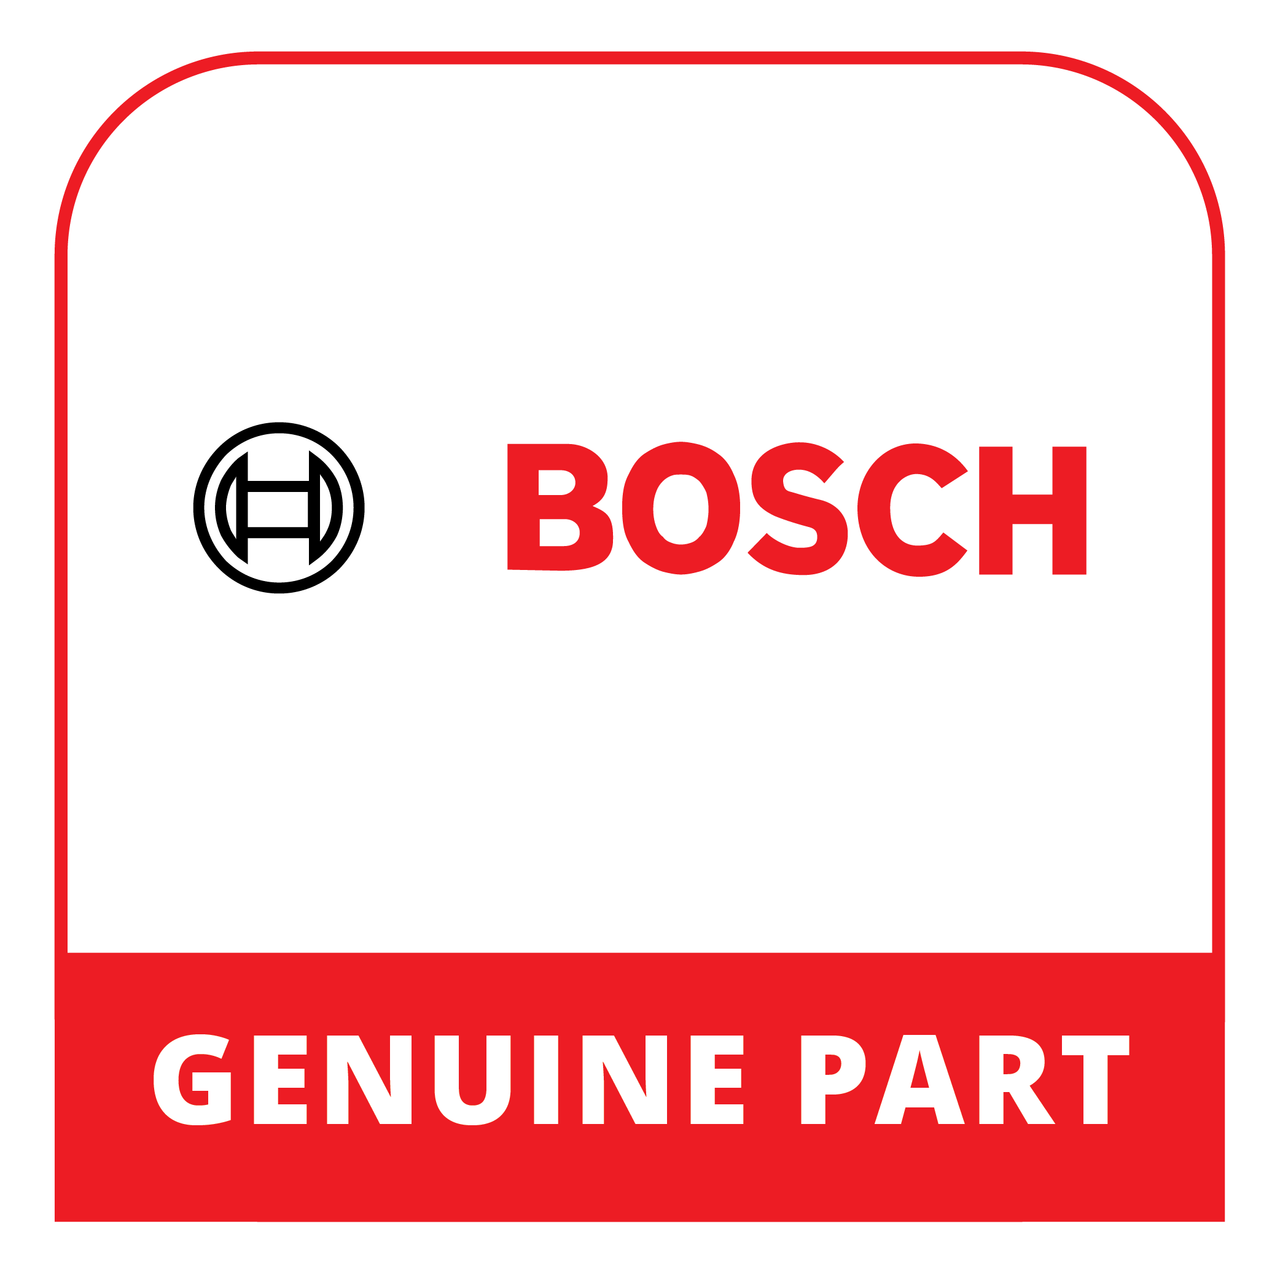 Bosch (Thermador) 11024712 - Strip-Decor - Genuine Bosch (Thermador) Part